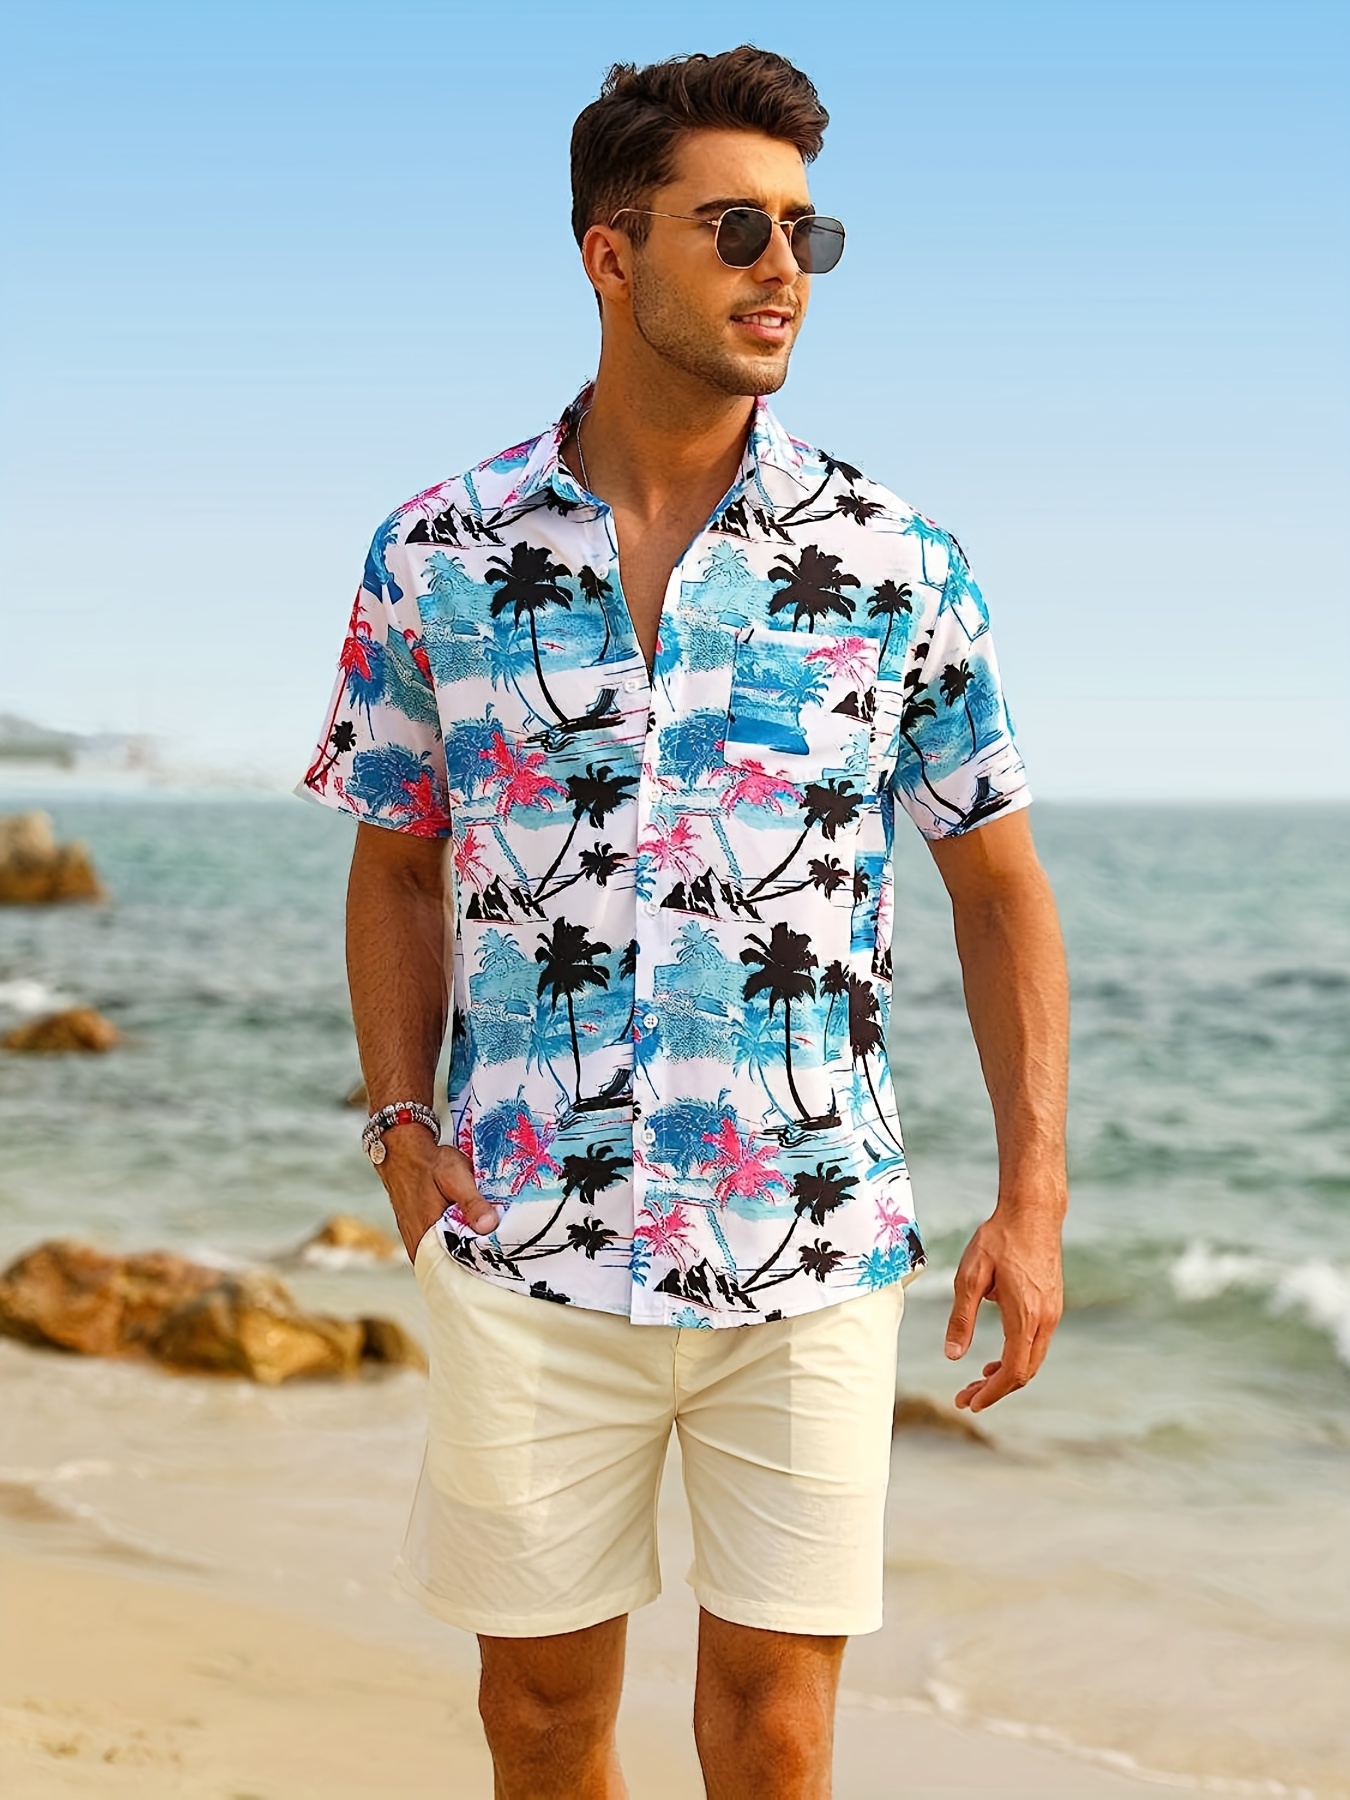 Printed Polycotton Men Beach Wear Resort Shirt, Half Sleeves at Rs